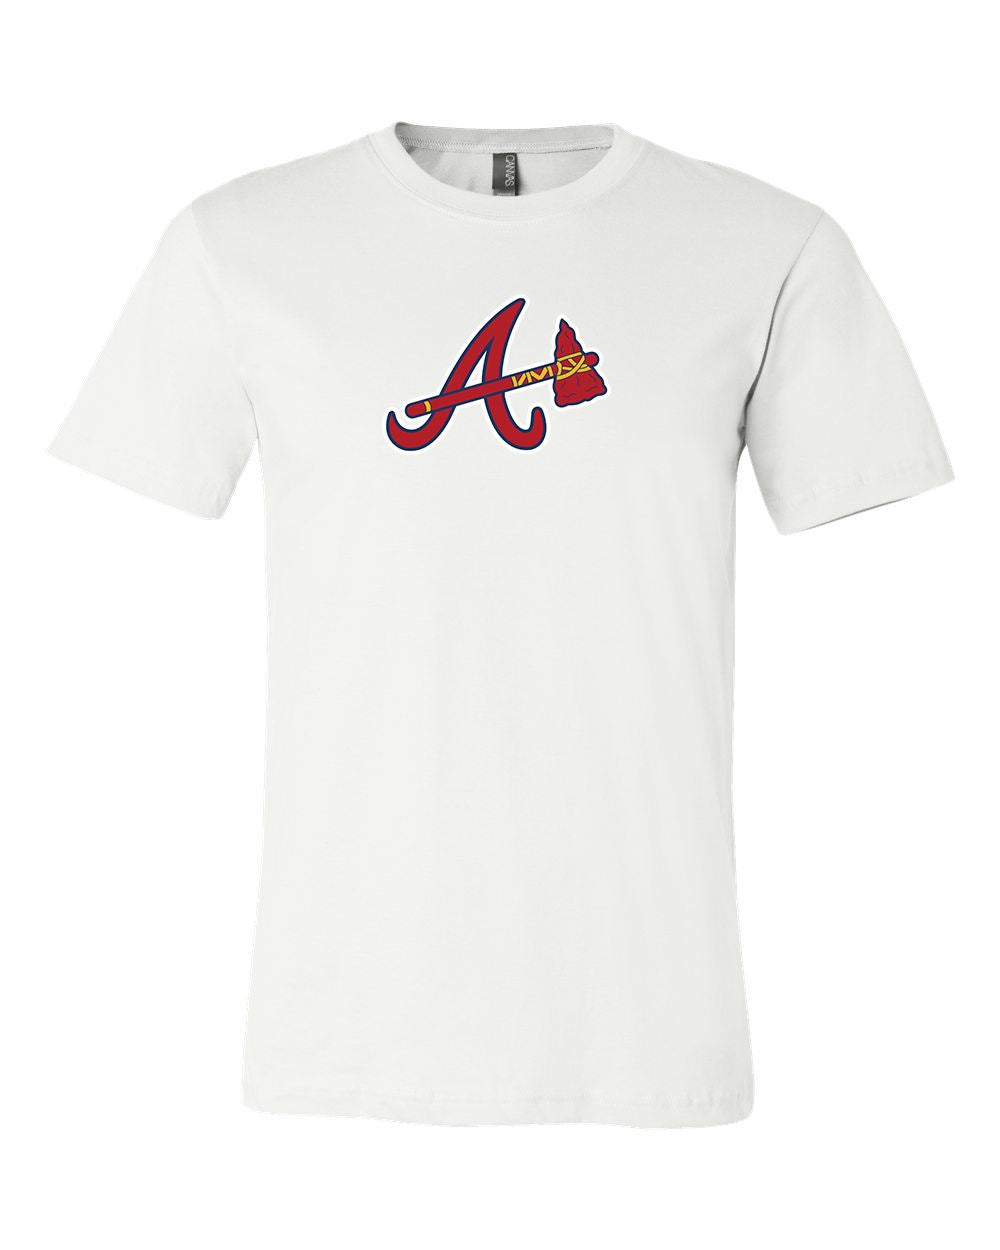 Atlanta Braves Shirts, Braves Tees, Braves T-Shirts